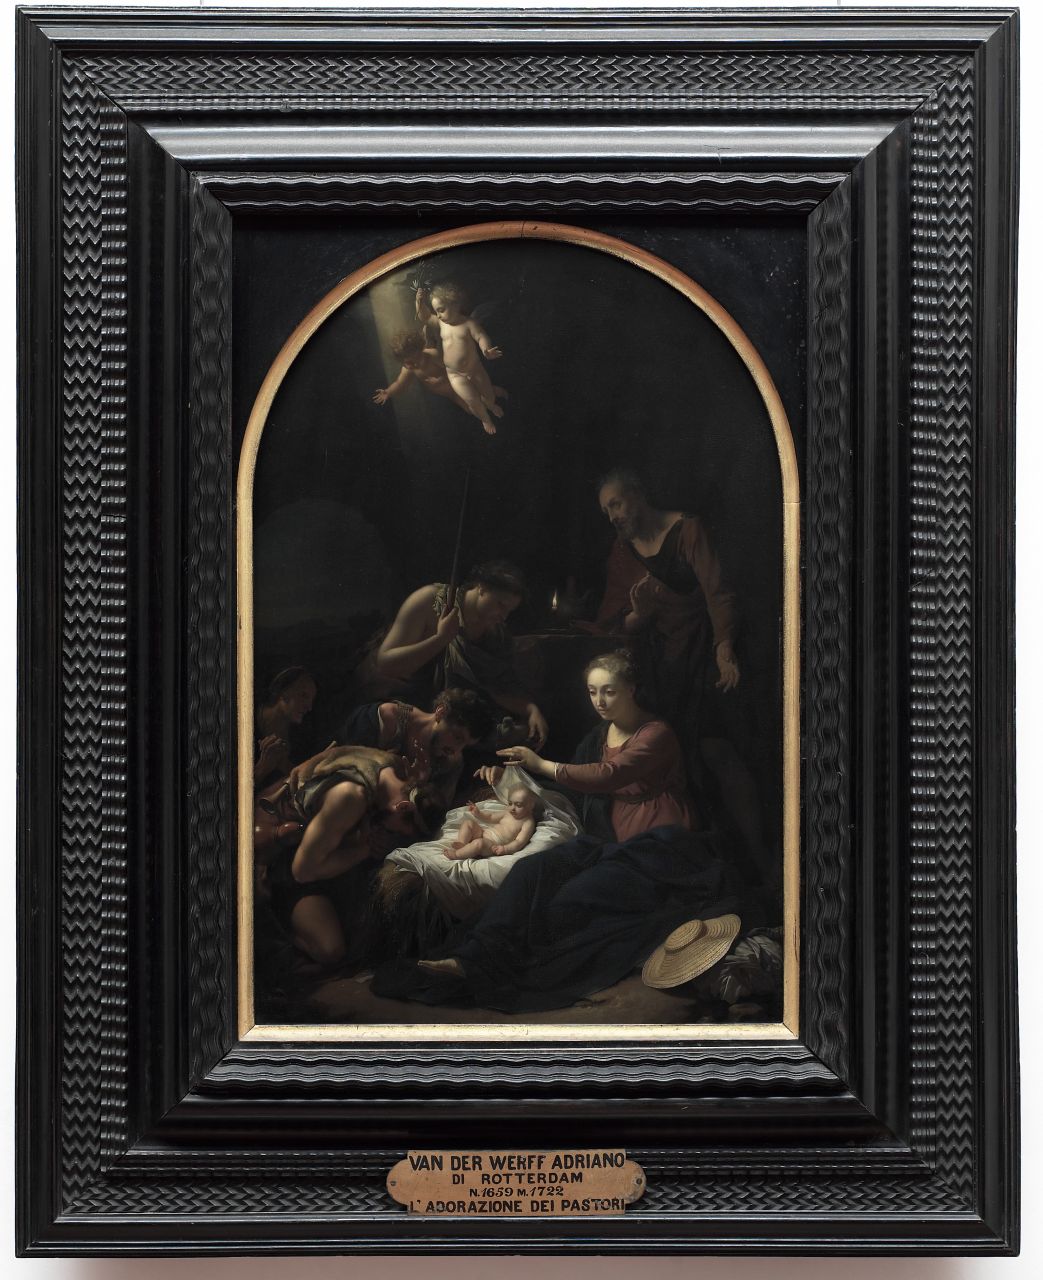 adorazione dei pastori (dipinto) di Van der Werff Adriaan (sec. XVIII)